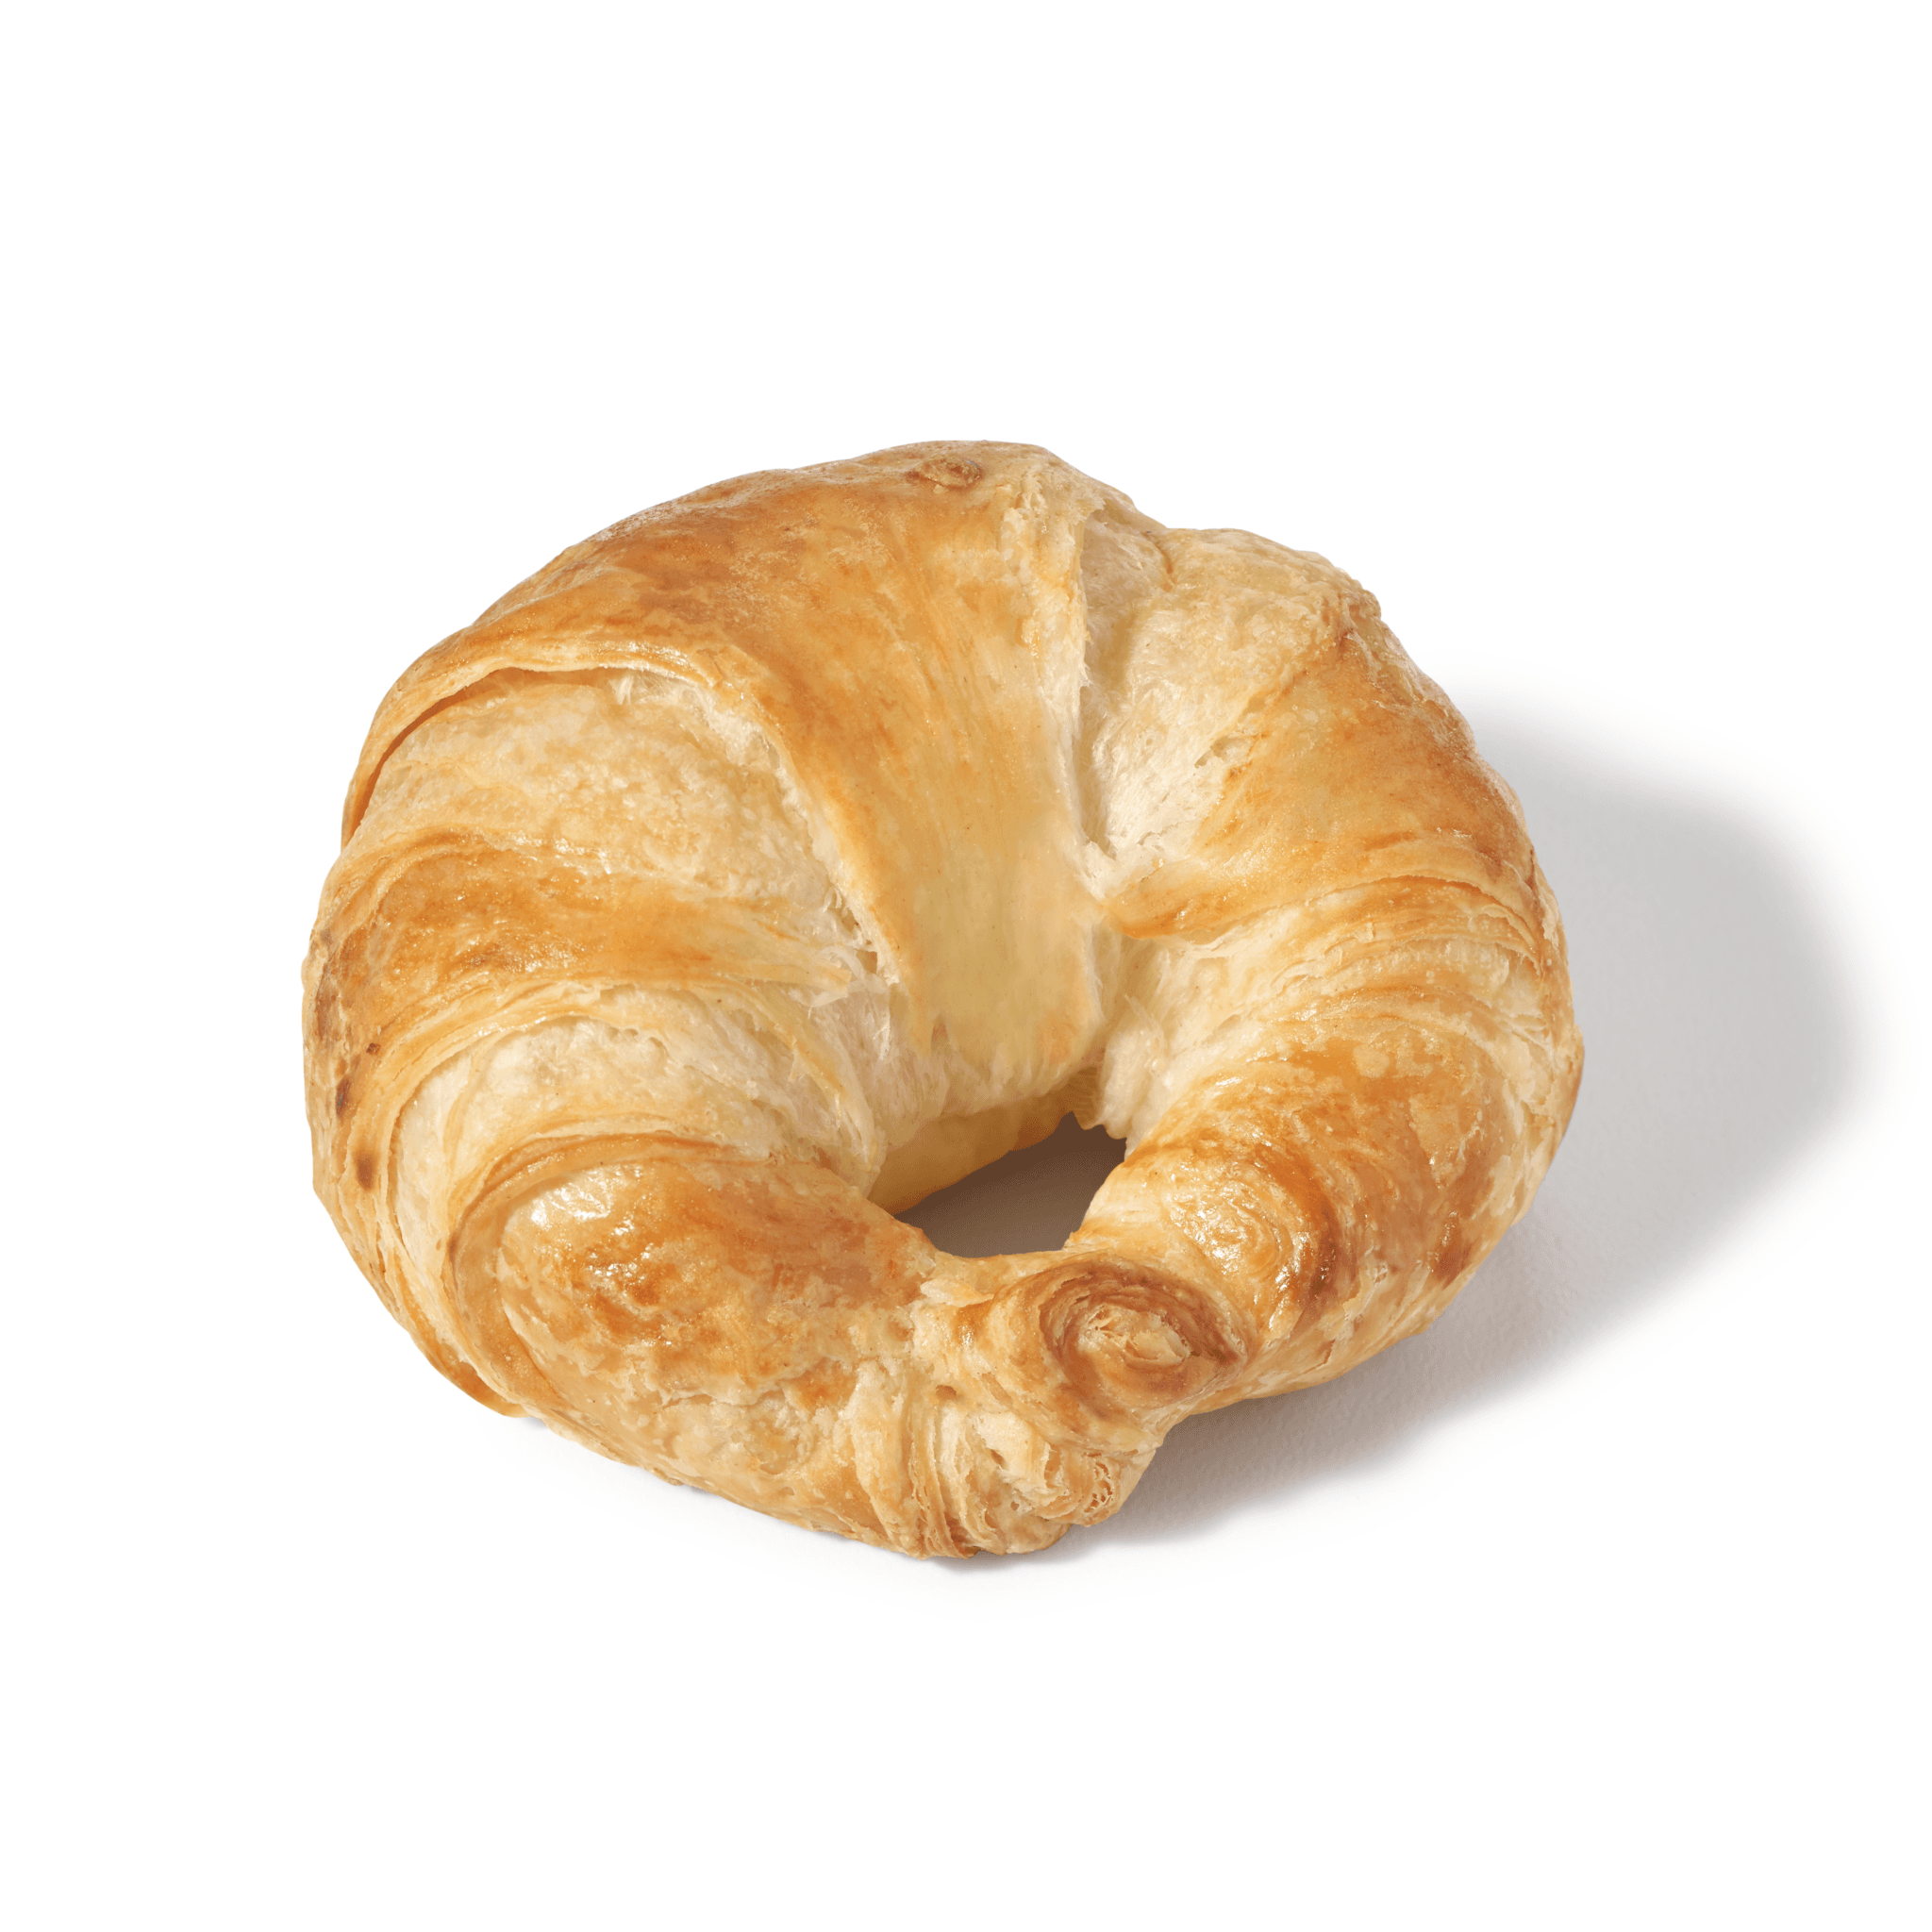 RCRH280 Curved croissant extra small angle